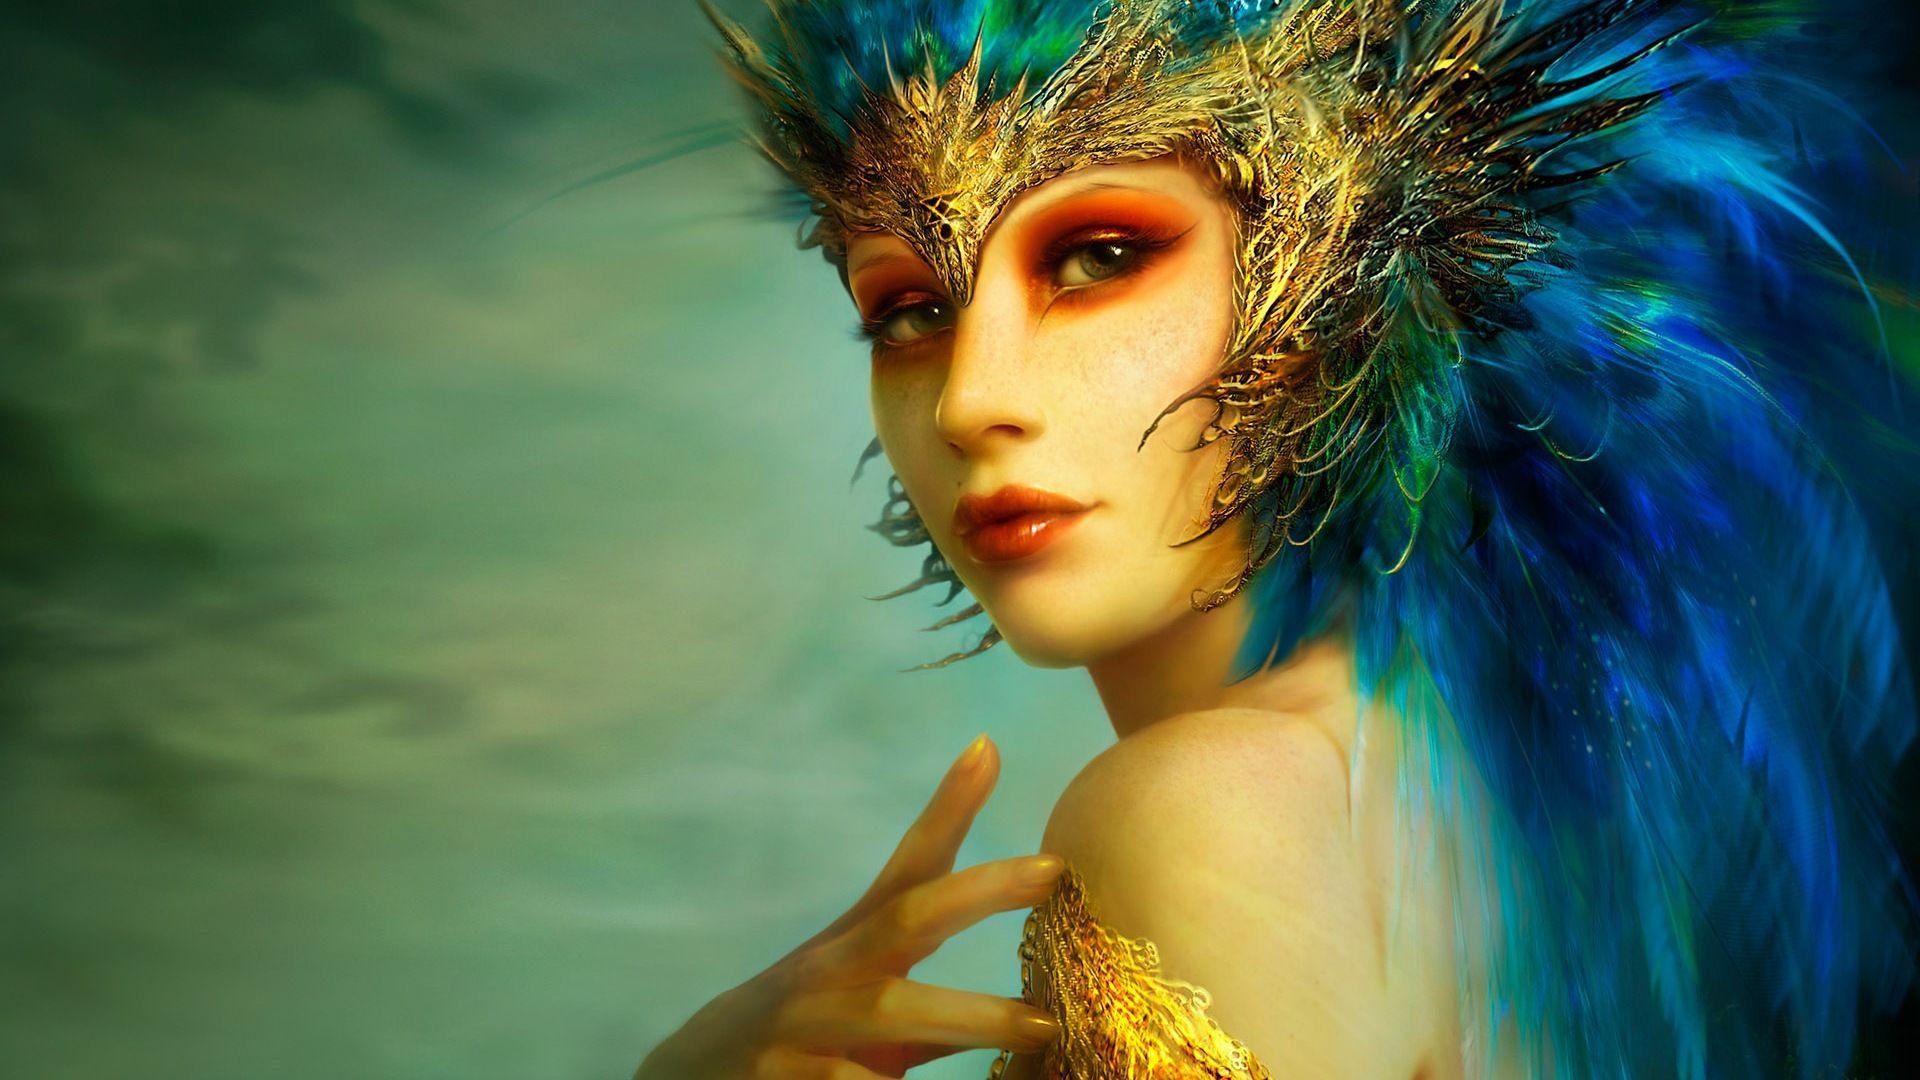 Image detail for -Golden Delicious fantasy girl blue hair